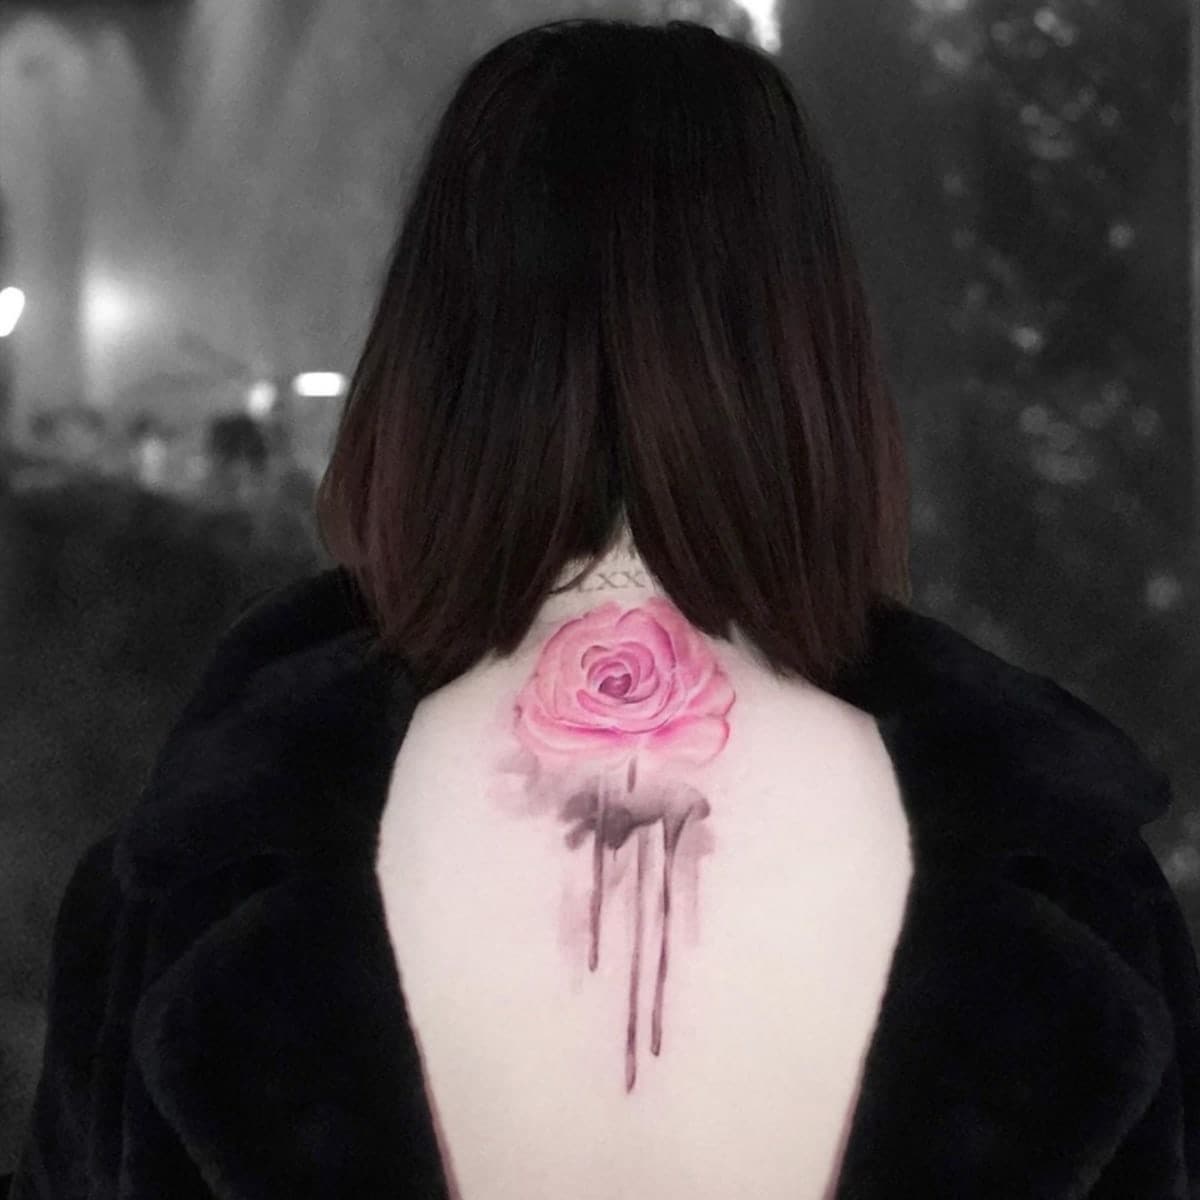 Selena Gomez's Dripping Rose Tattoo